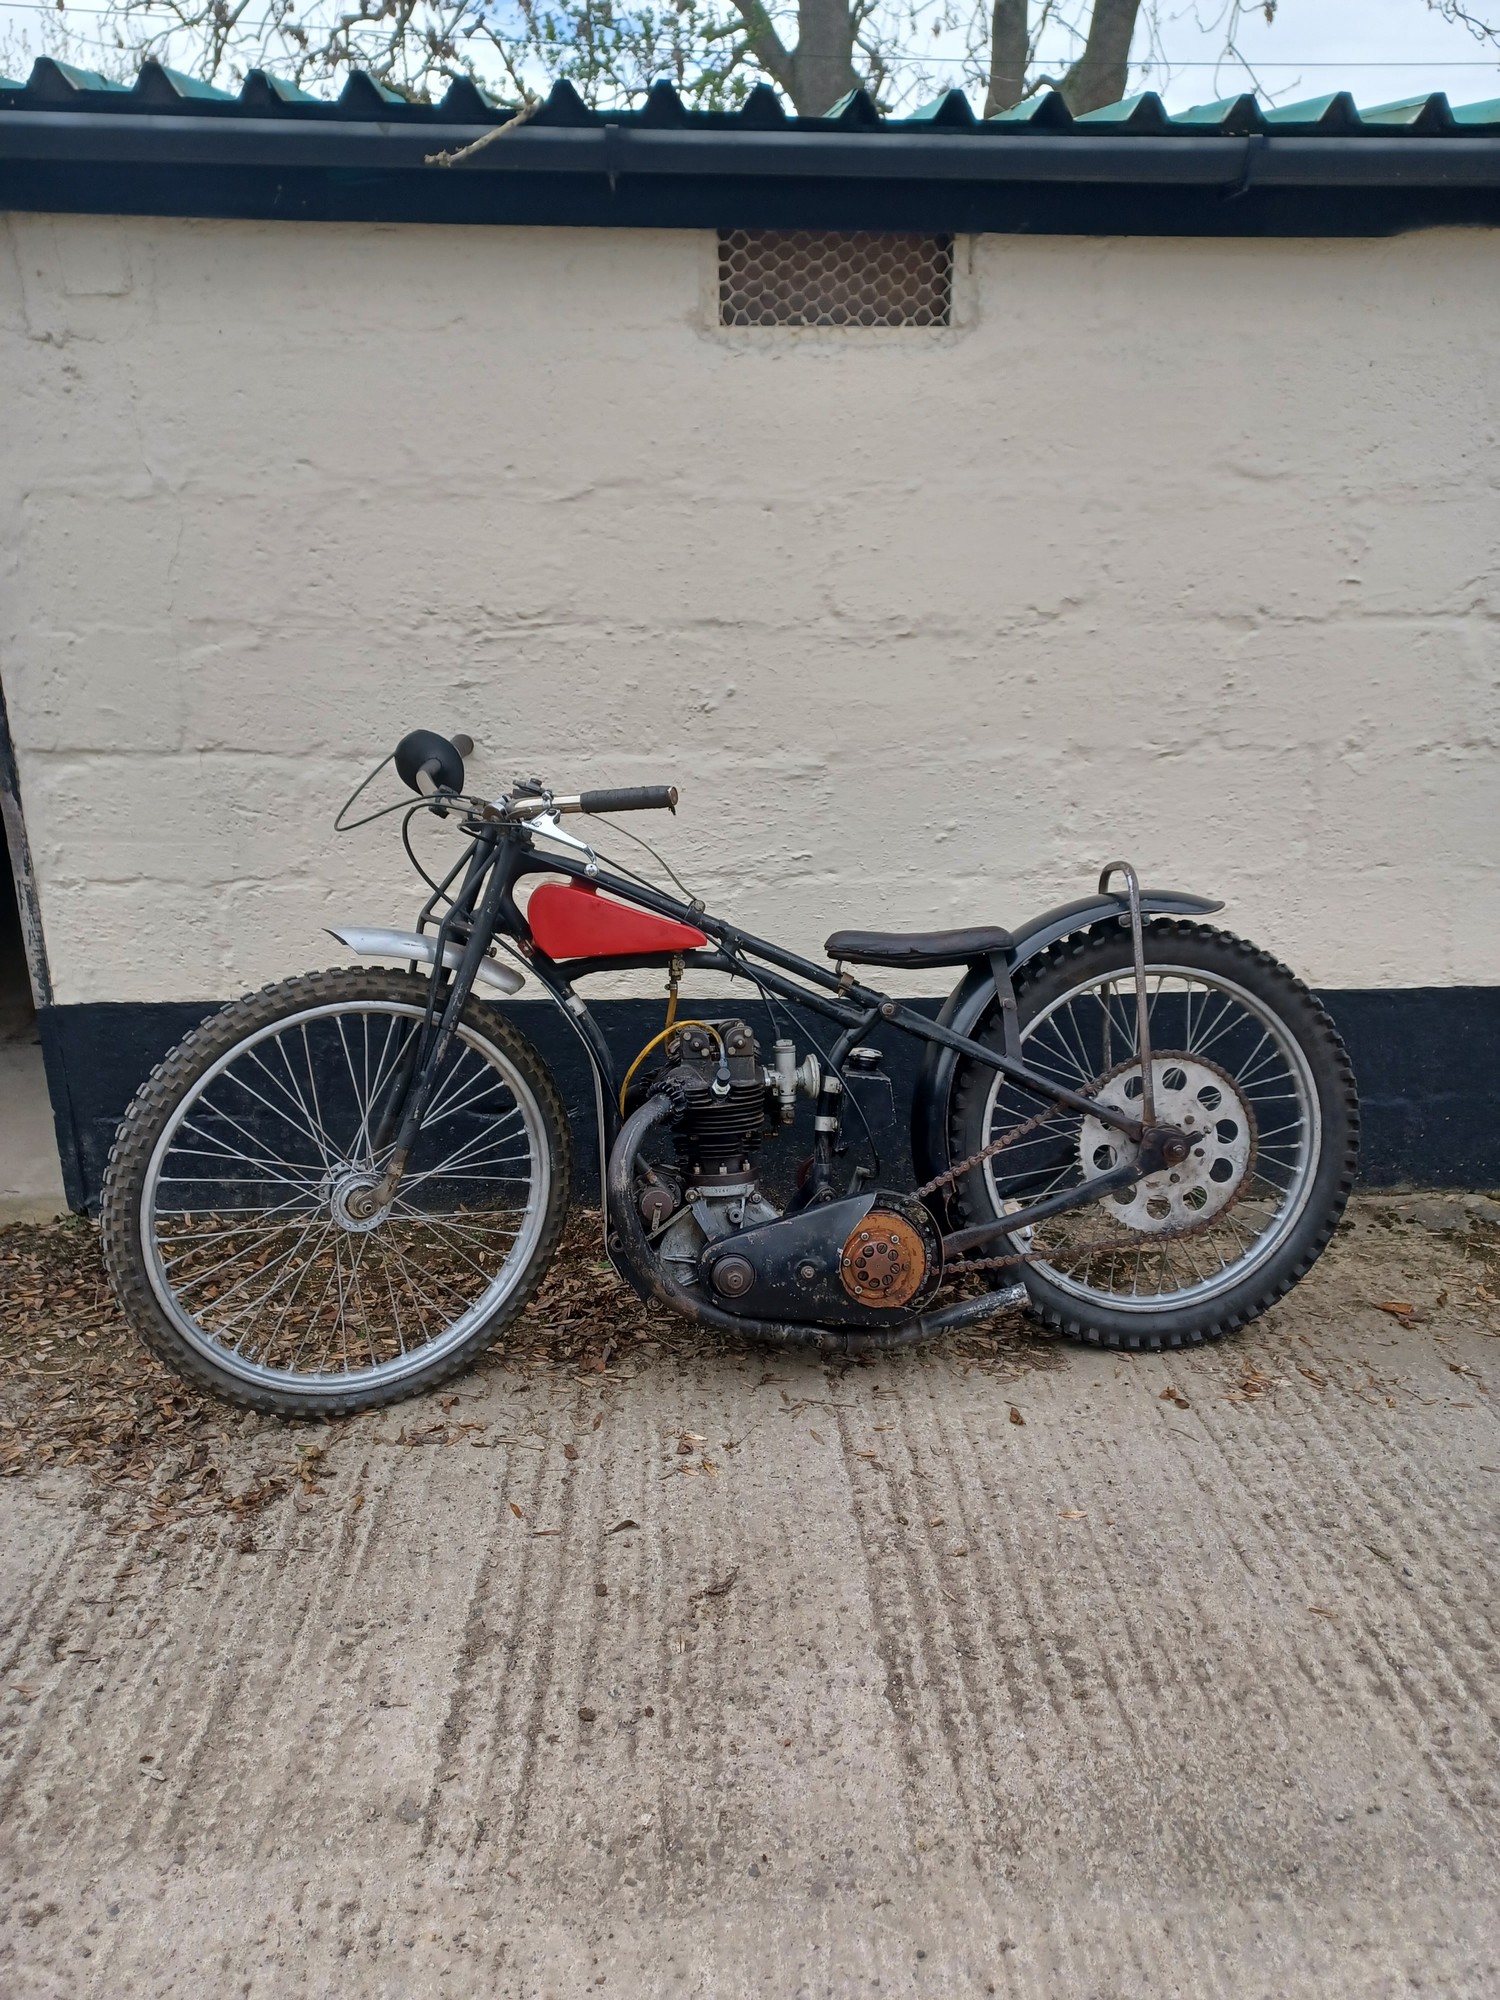 1930 RUDGE 500cc SPEEDWAY BIKE - Image 2 of 7